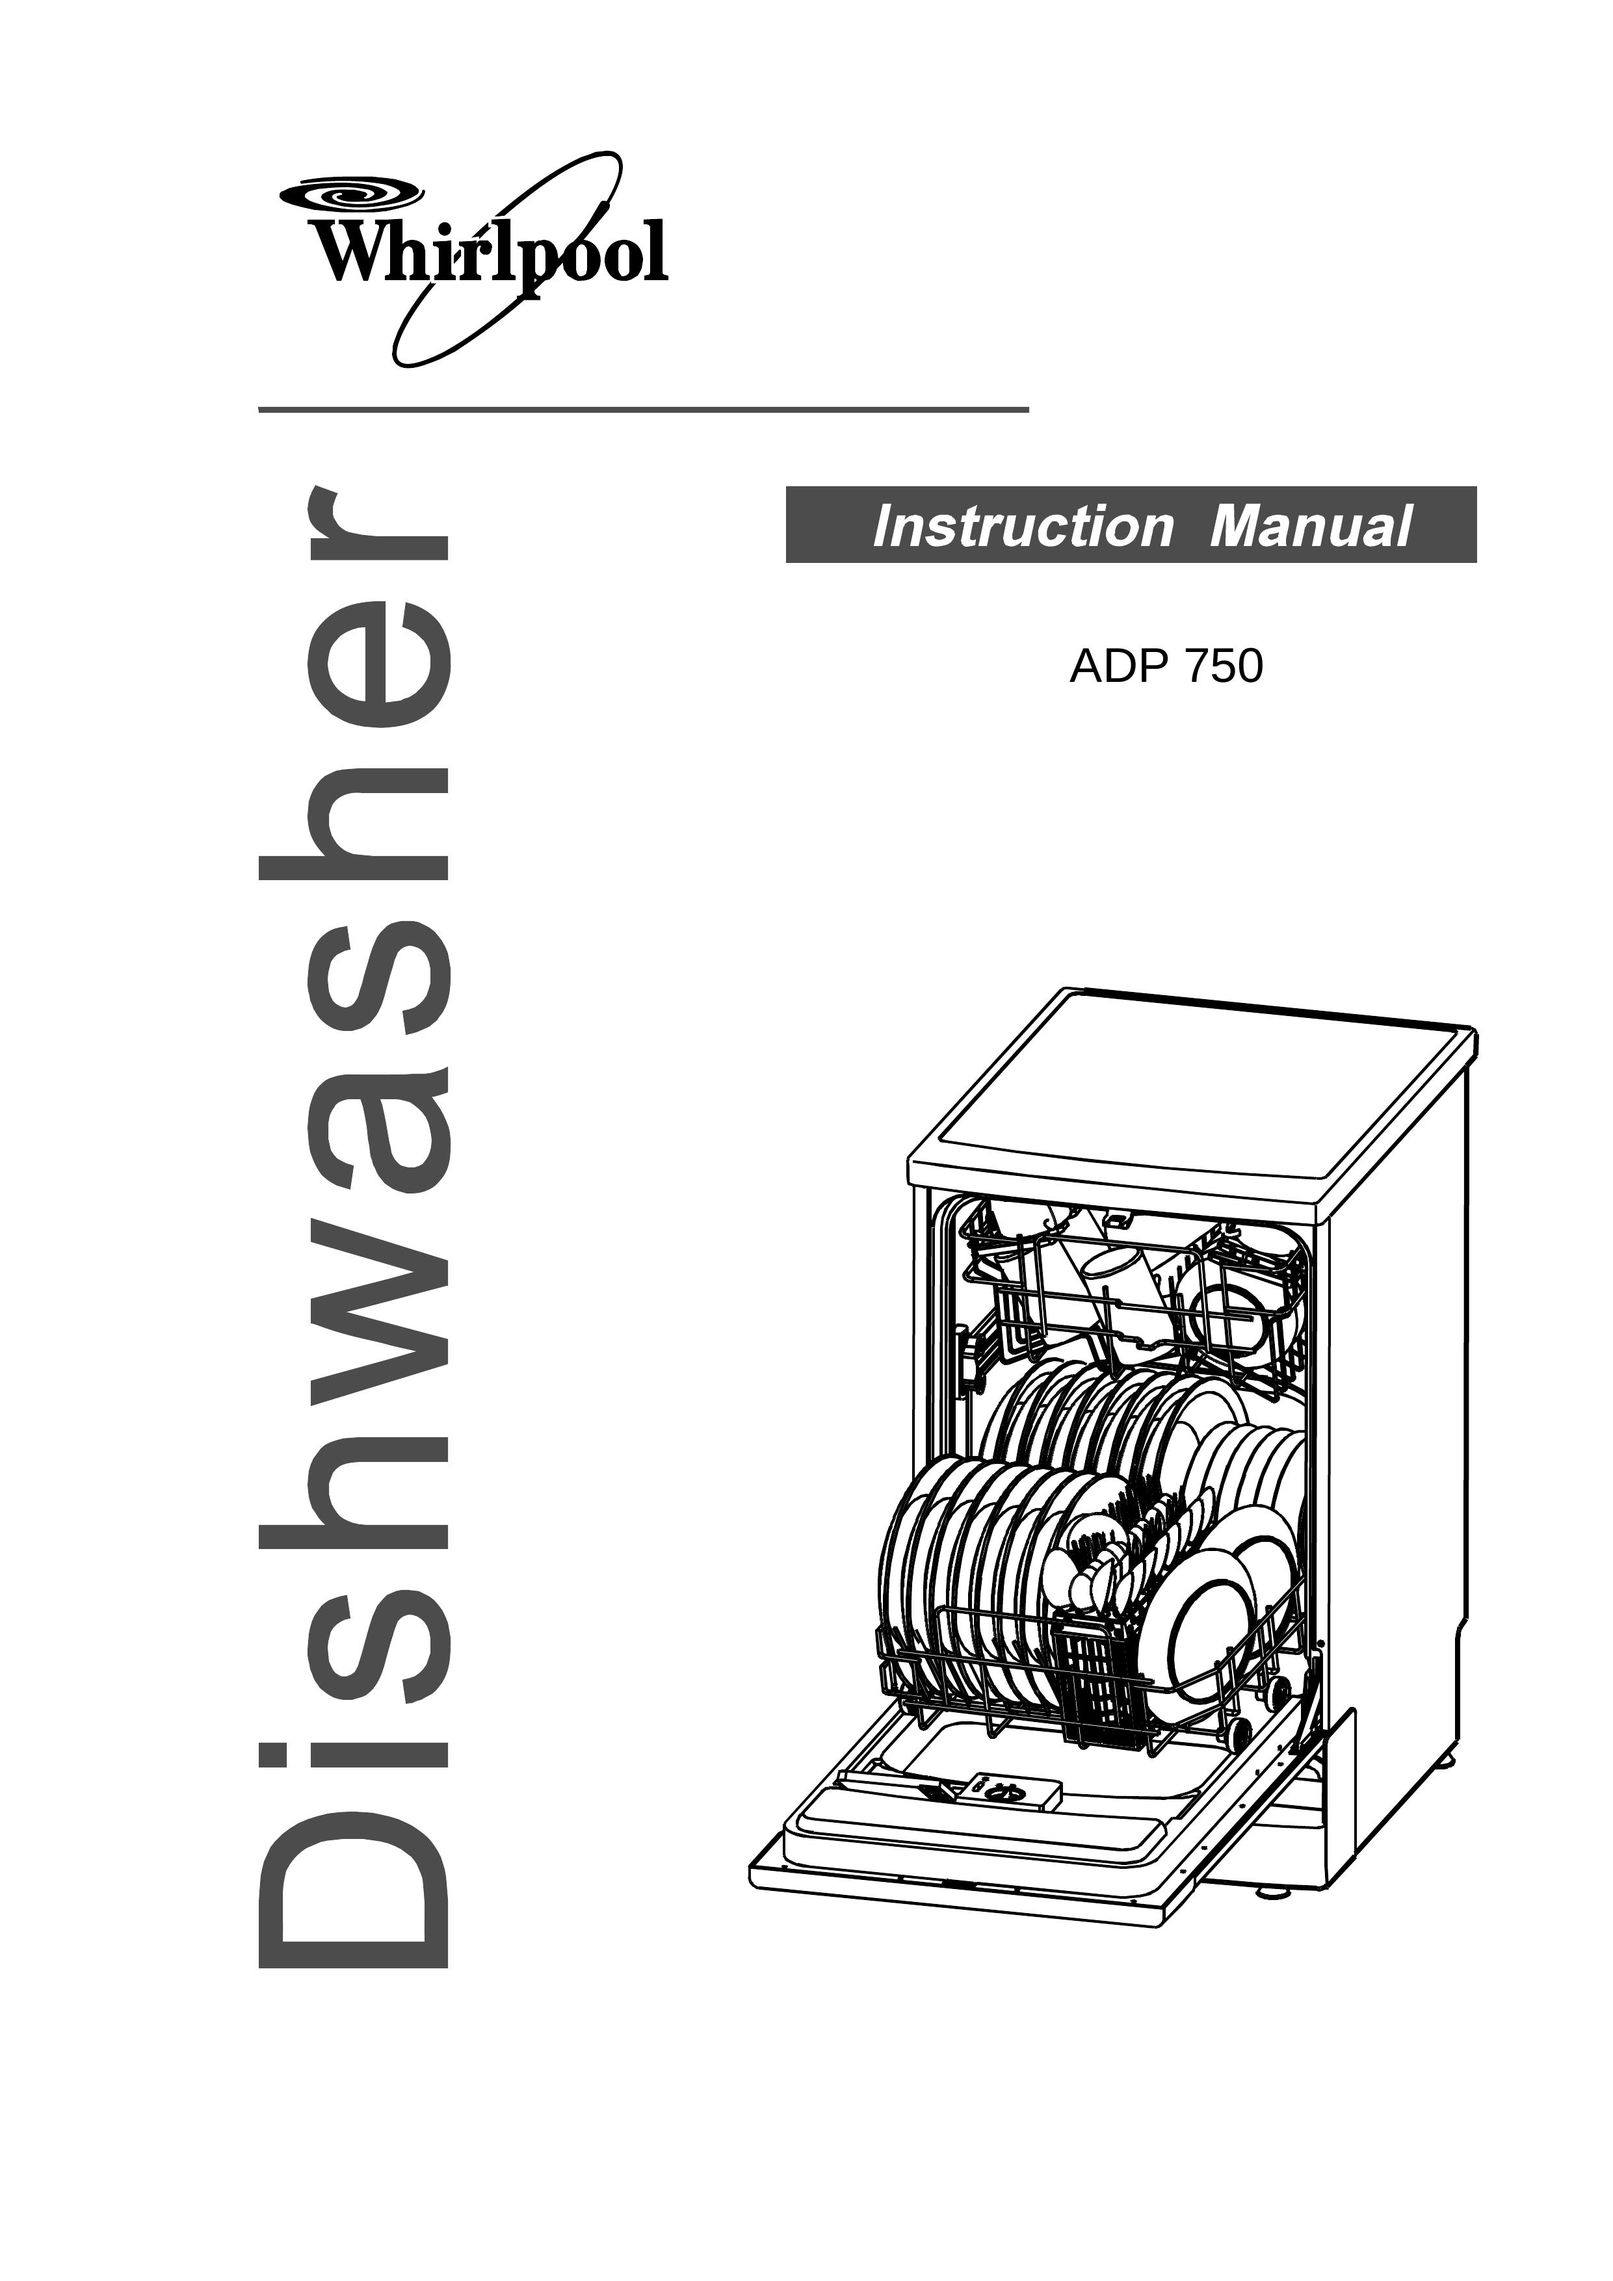 Whirlpool ADP 750 Appliance Trim Kit User Manual